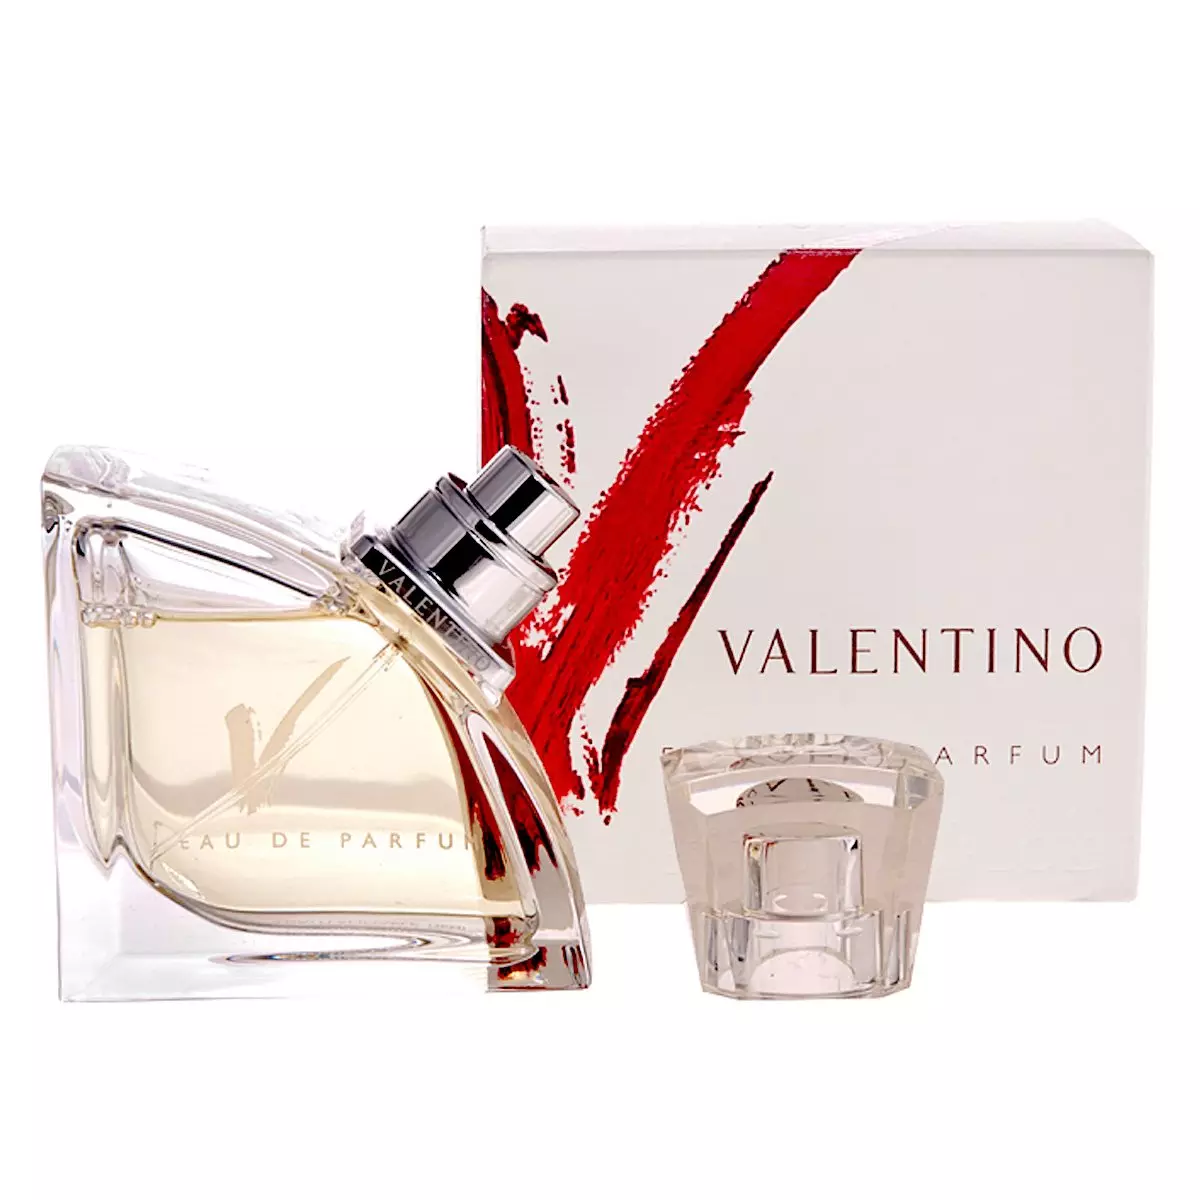 Valentino (147 ფოტო): კოლექცია წითელი Valentino, ჩანთები, sneakers და sneakers, ფეხსაცმელი და sandals, ქალთა კაბები და სუნამო, ბრენდი მიმოხილვა 3811_130